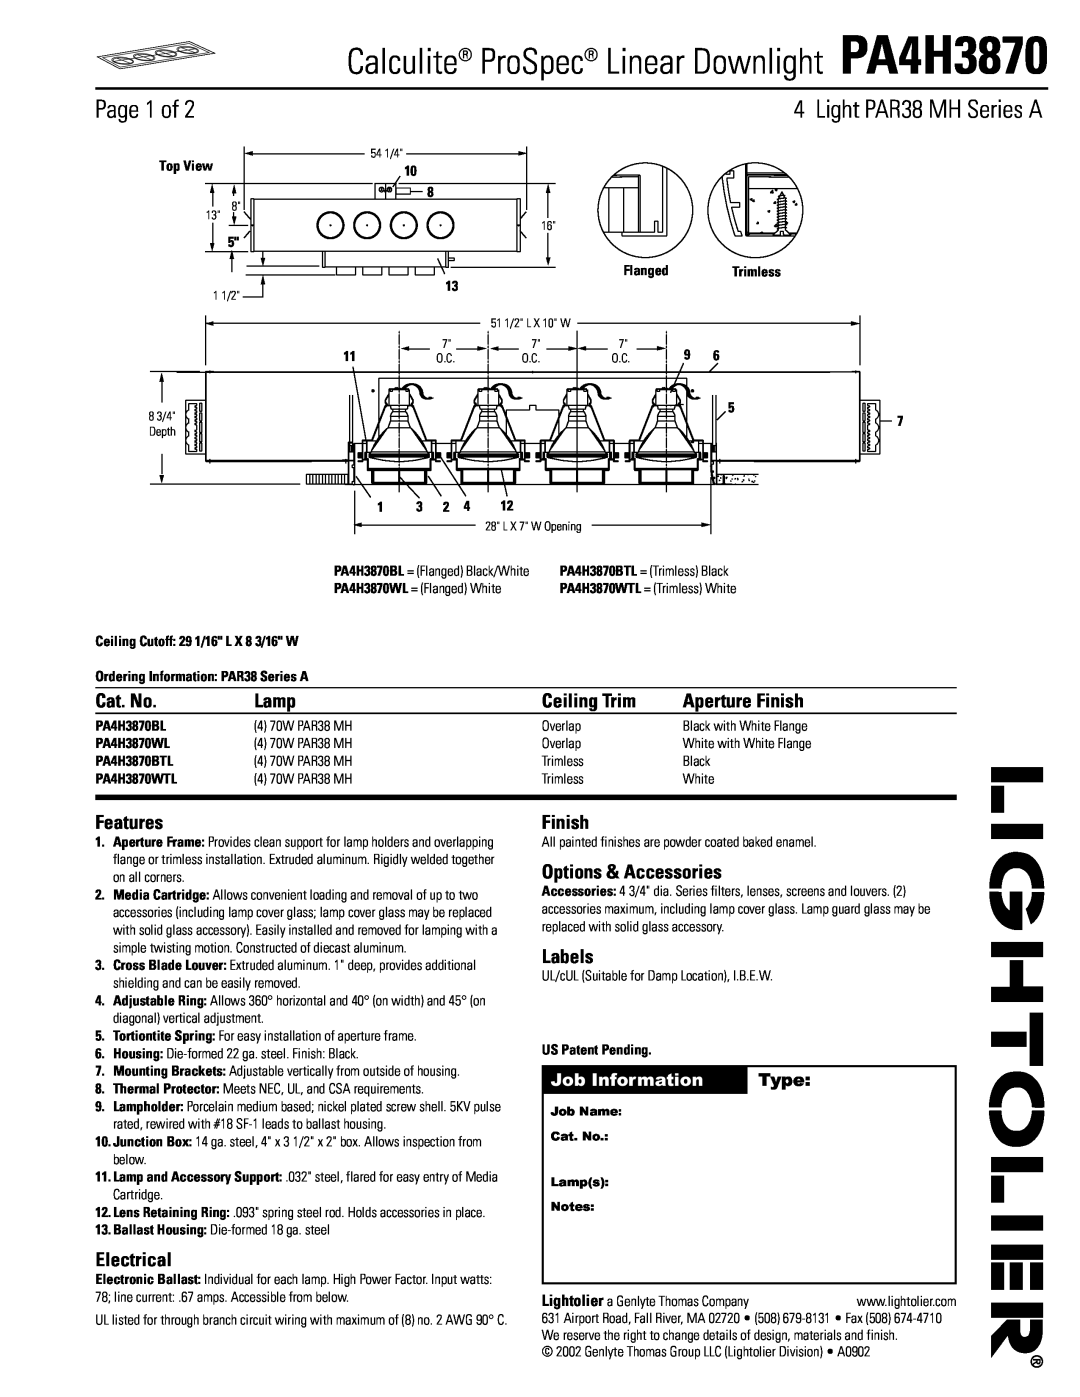 Lightolier PA4H3870 manual Page 1 of, Light PAR38 MH Series A, Cat. No, Lamp, Ceiling Trim, Aperture Finish, Features 